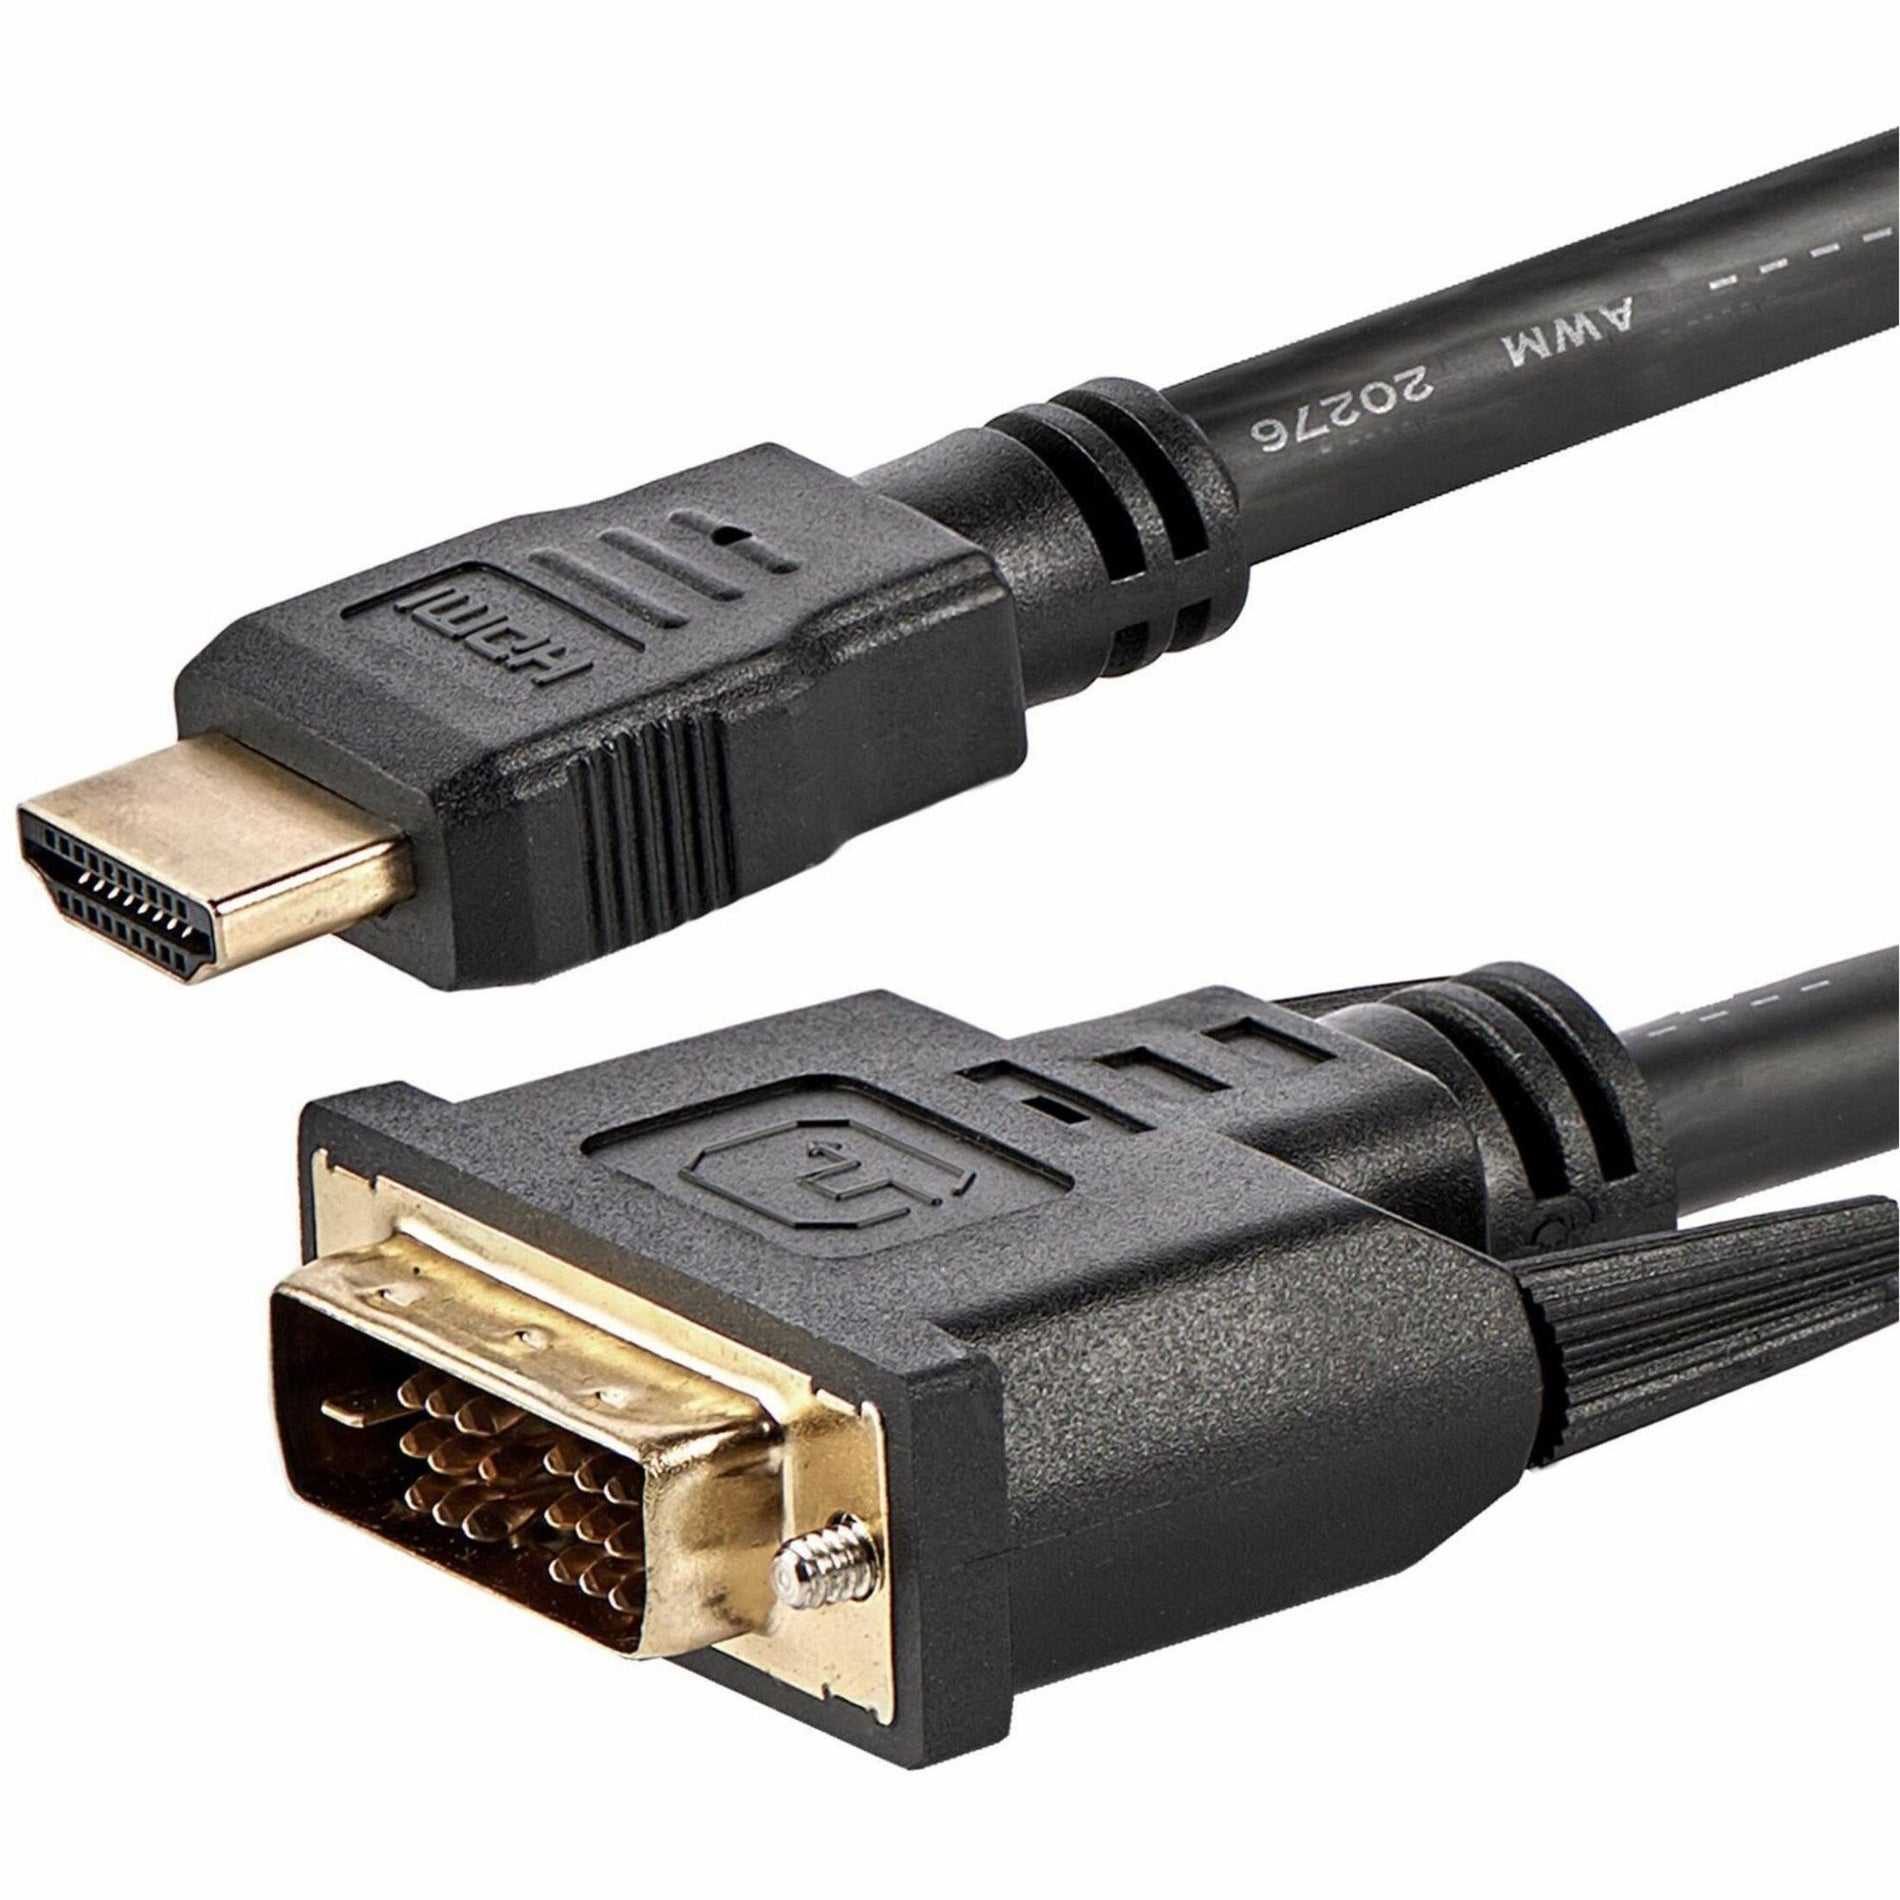 StarTech.com HDMIDVIMM6 6 ft HDMI to DVI-D Cable - M/M, Copper Conductor, Strain Relief, Molded, Black